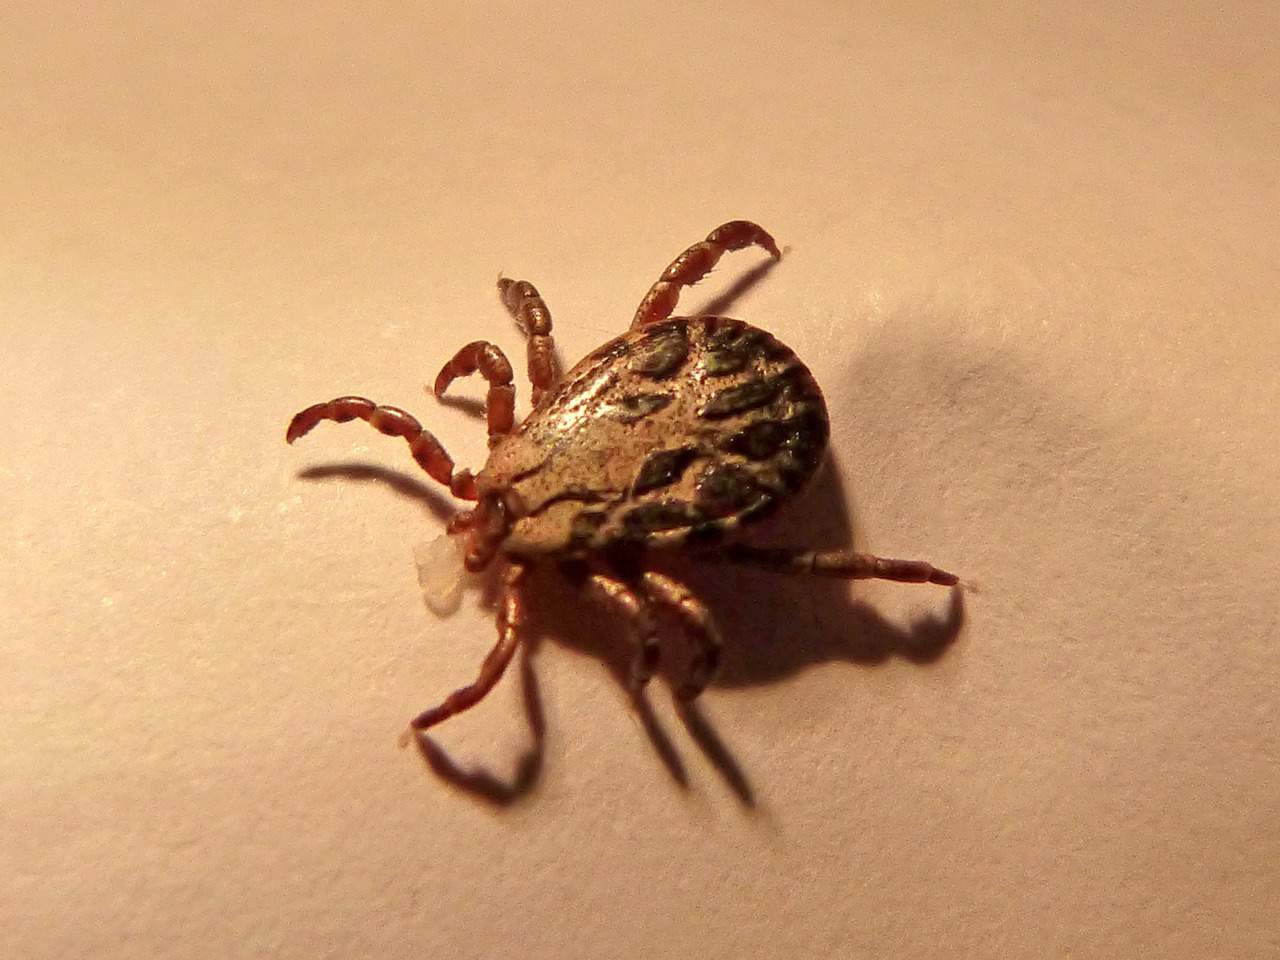 ticks have unique adaptations